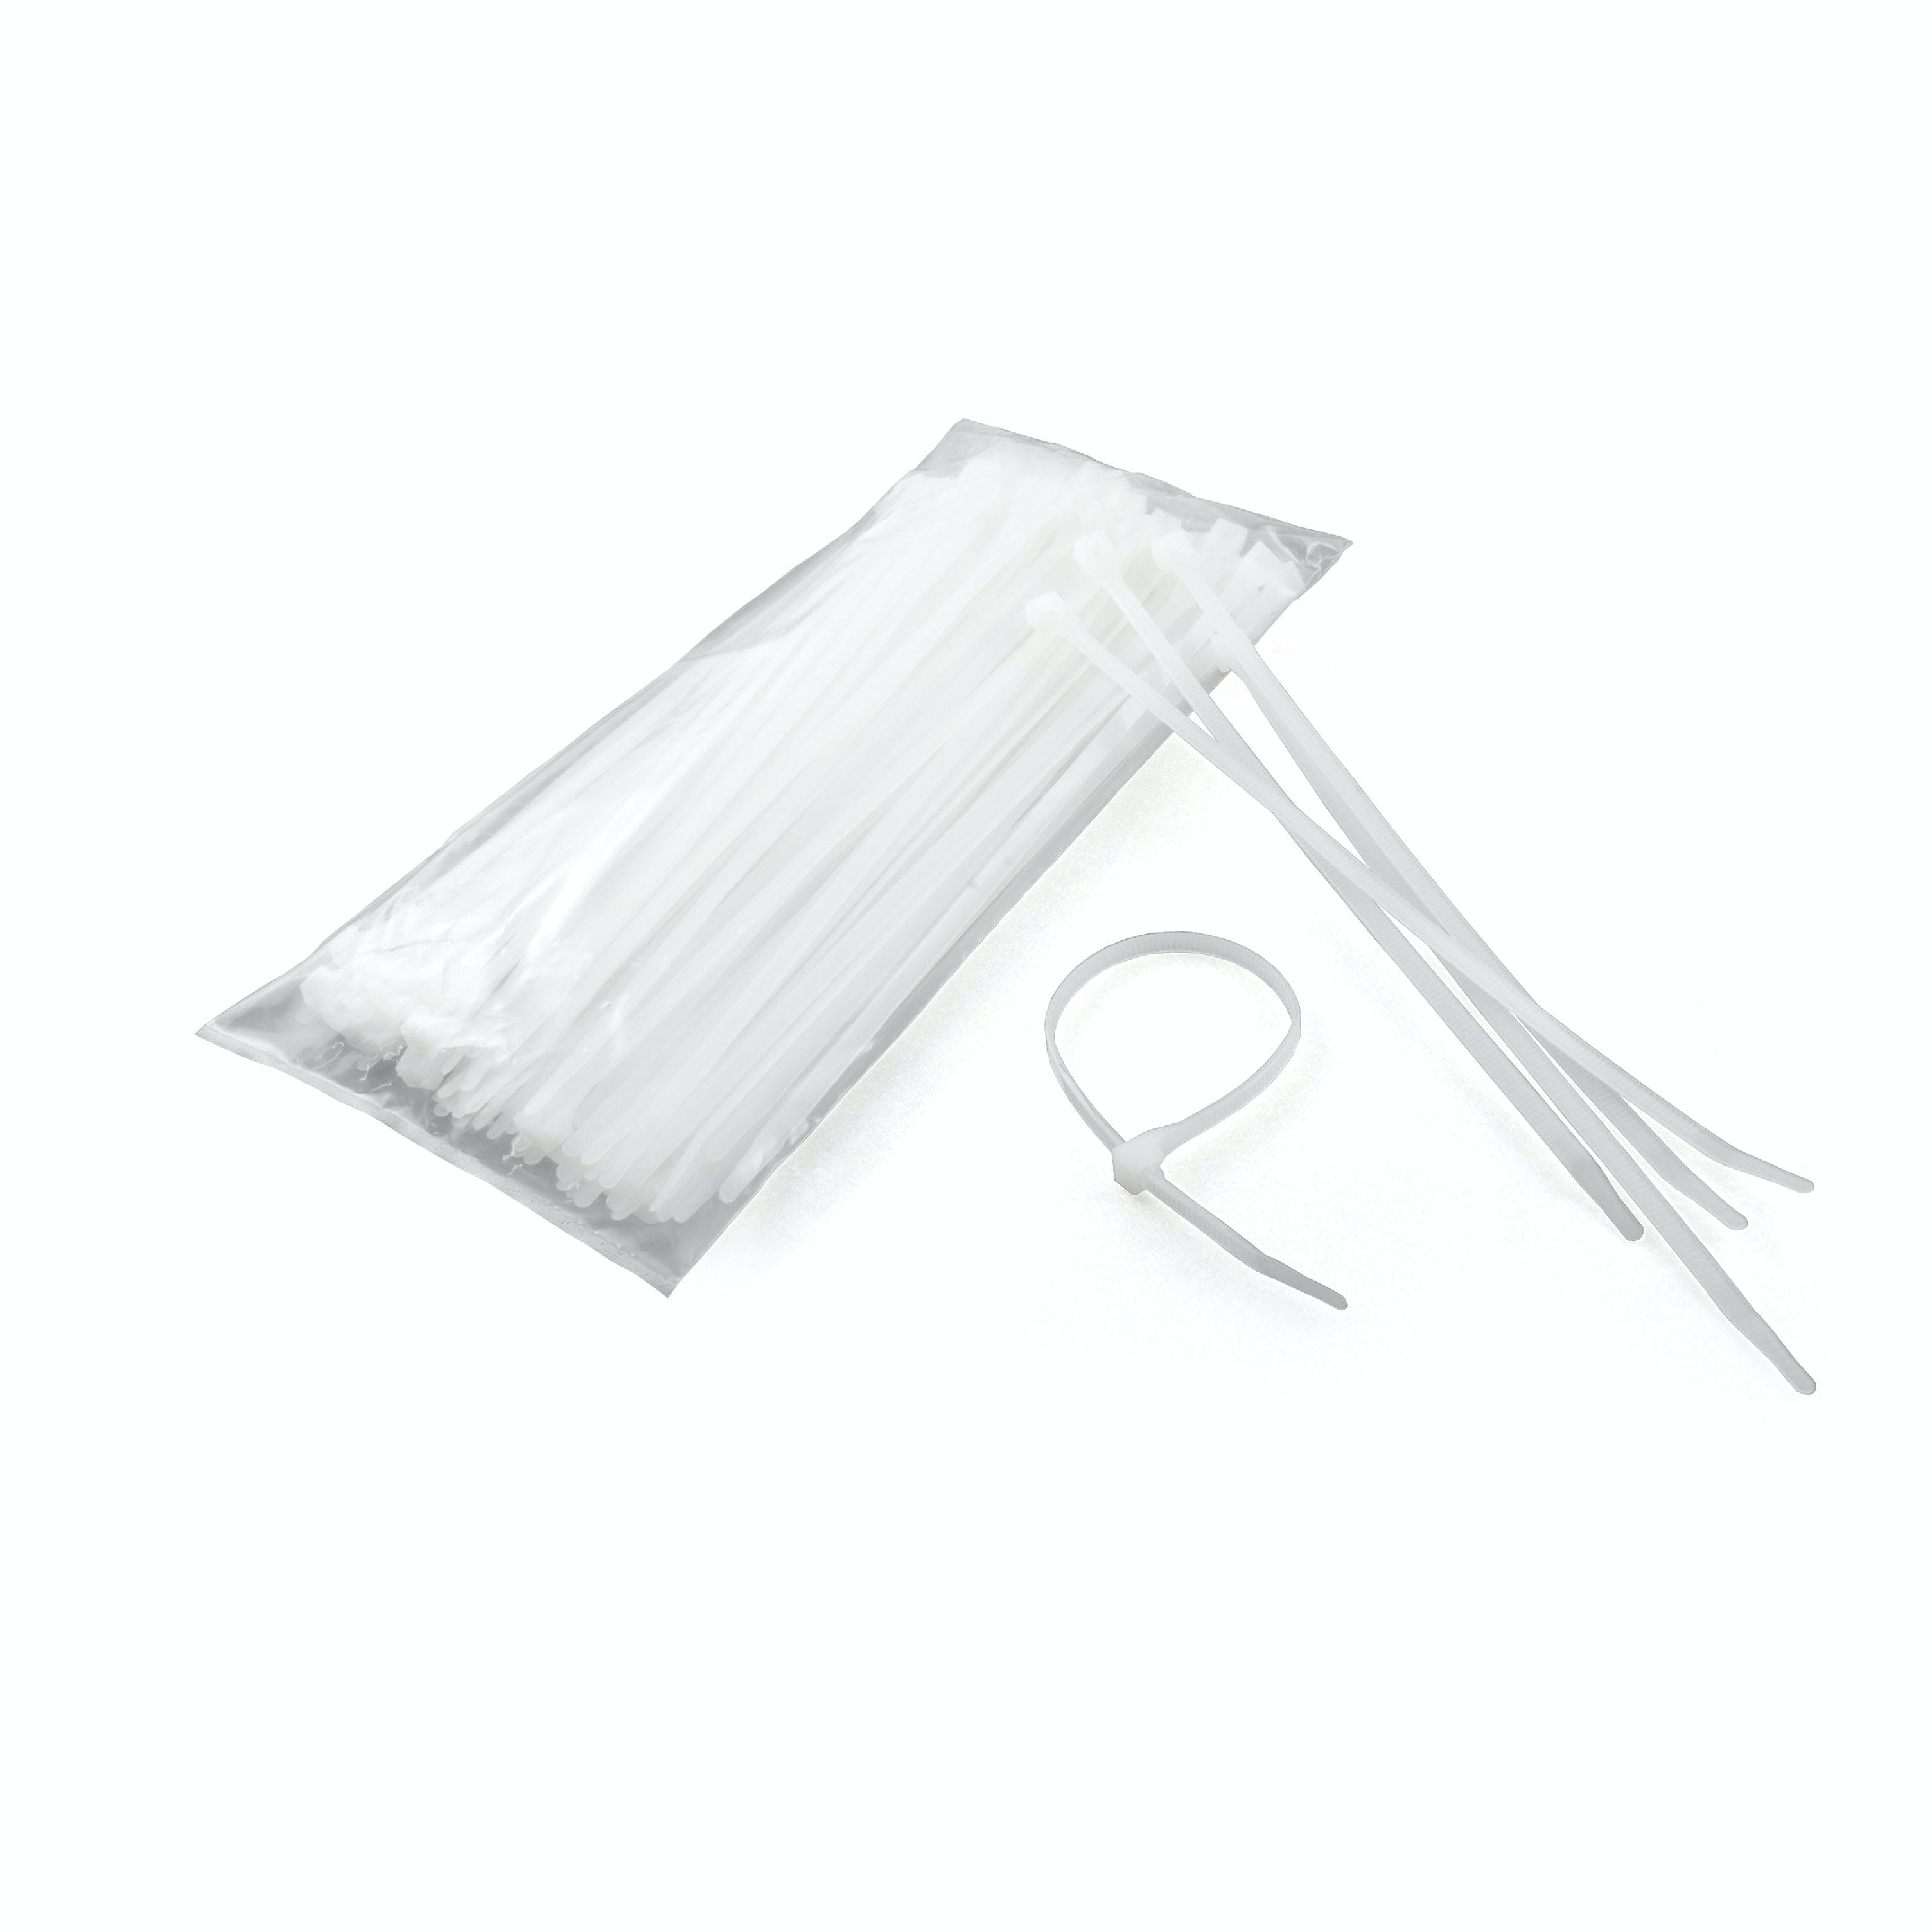 CURT 59728 7-1/4 Plastic Zip Wire Ties (100-Pack)